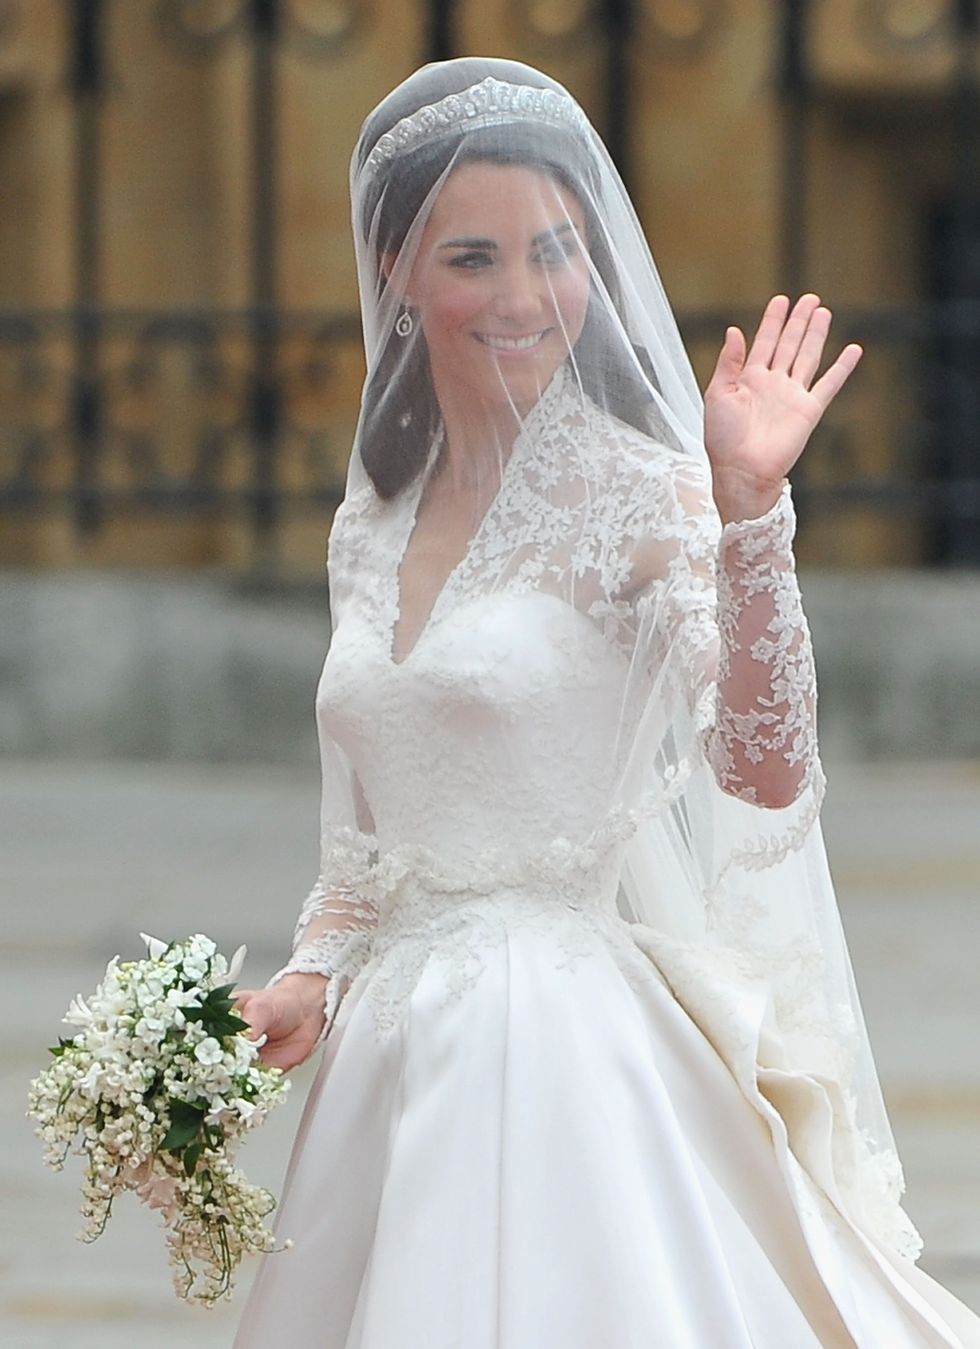 Meghan Markle's Wedding Bouquet - Photos of Meghan's Gorgeous Royal ...